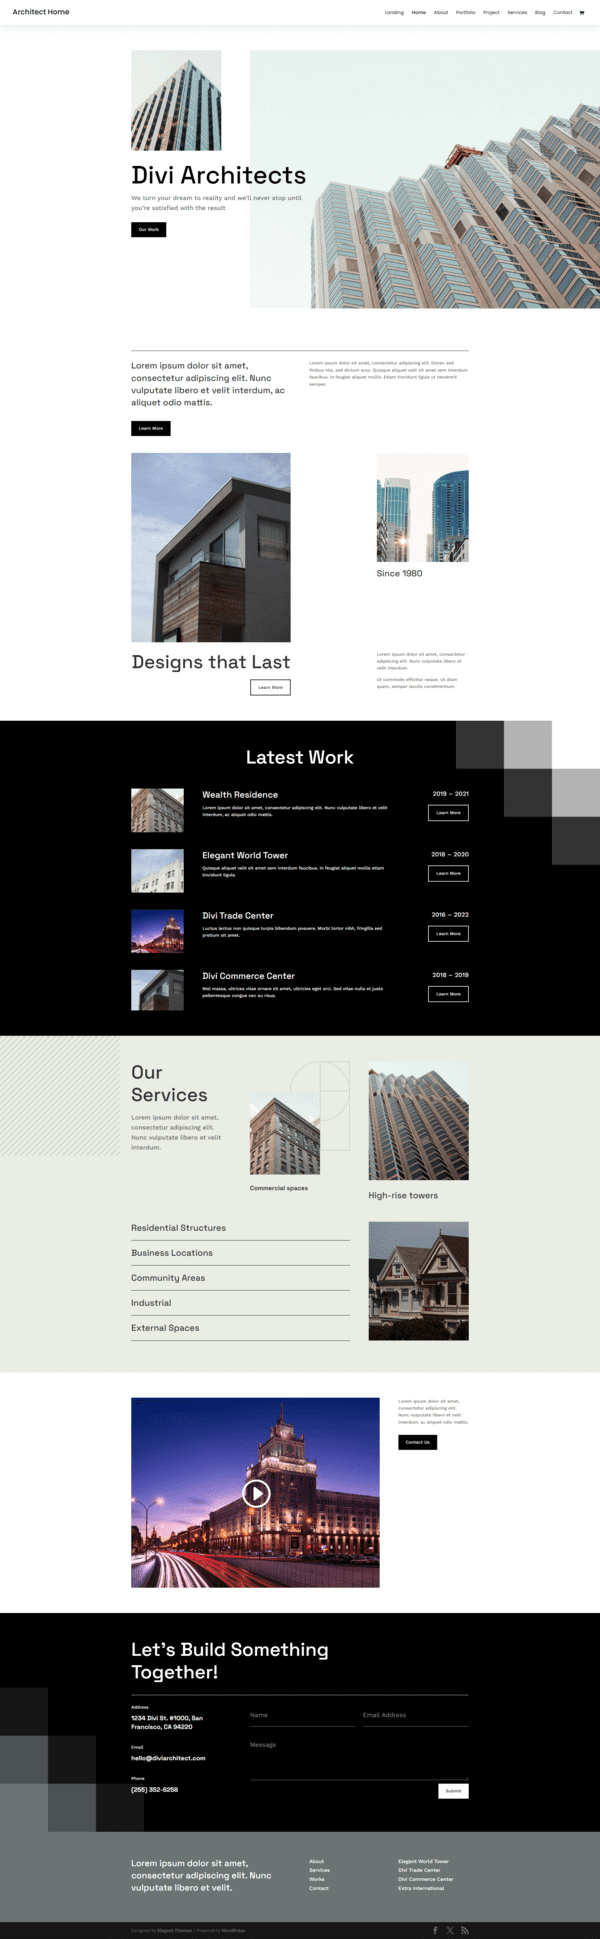 pagina web arquitecto